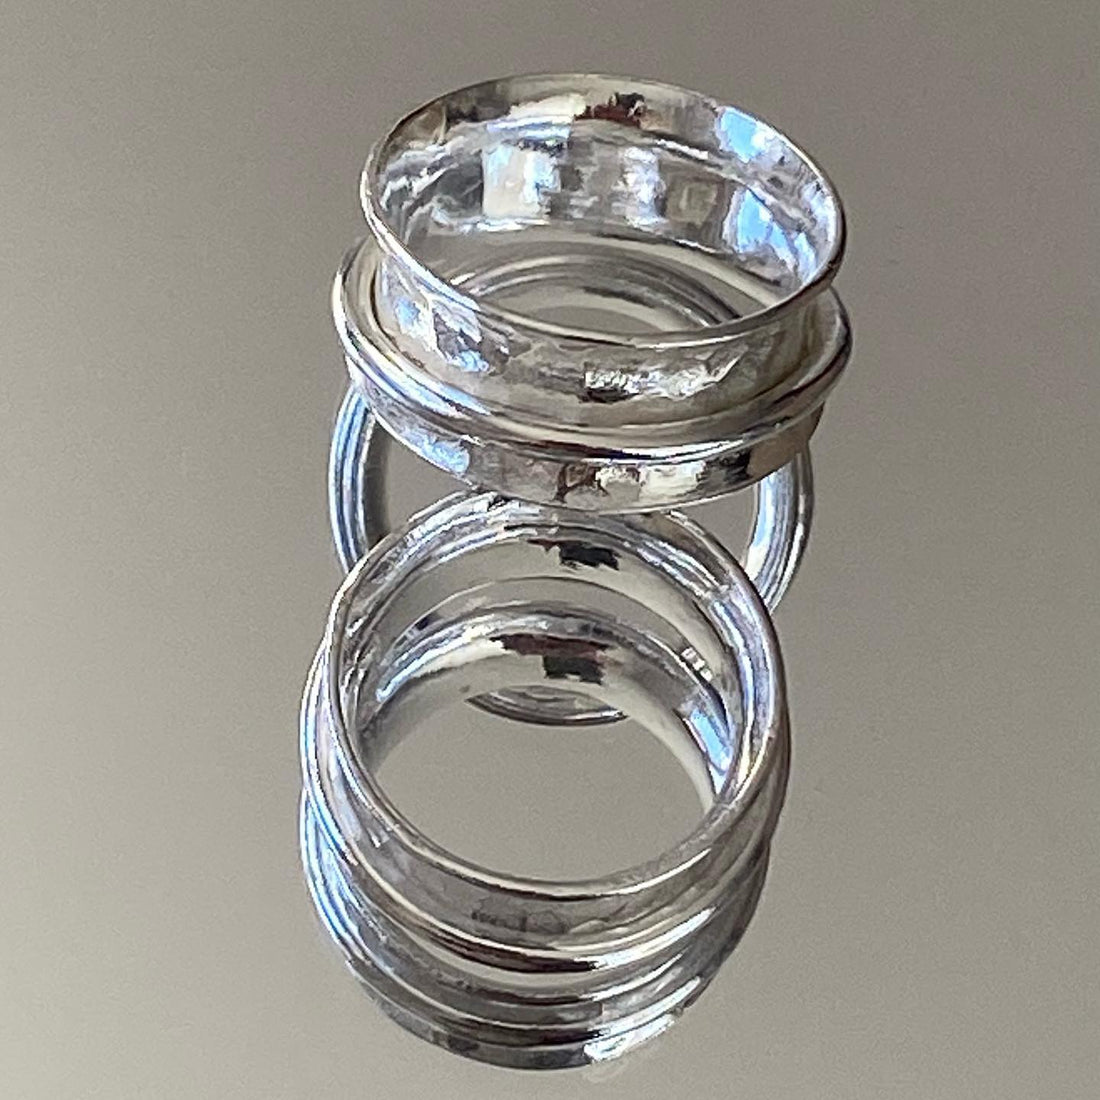 Stunning Silver Spinner Rings. Making...